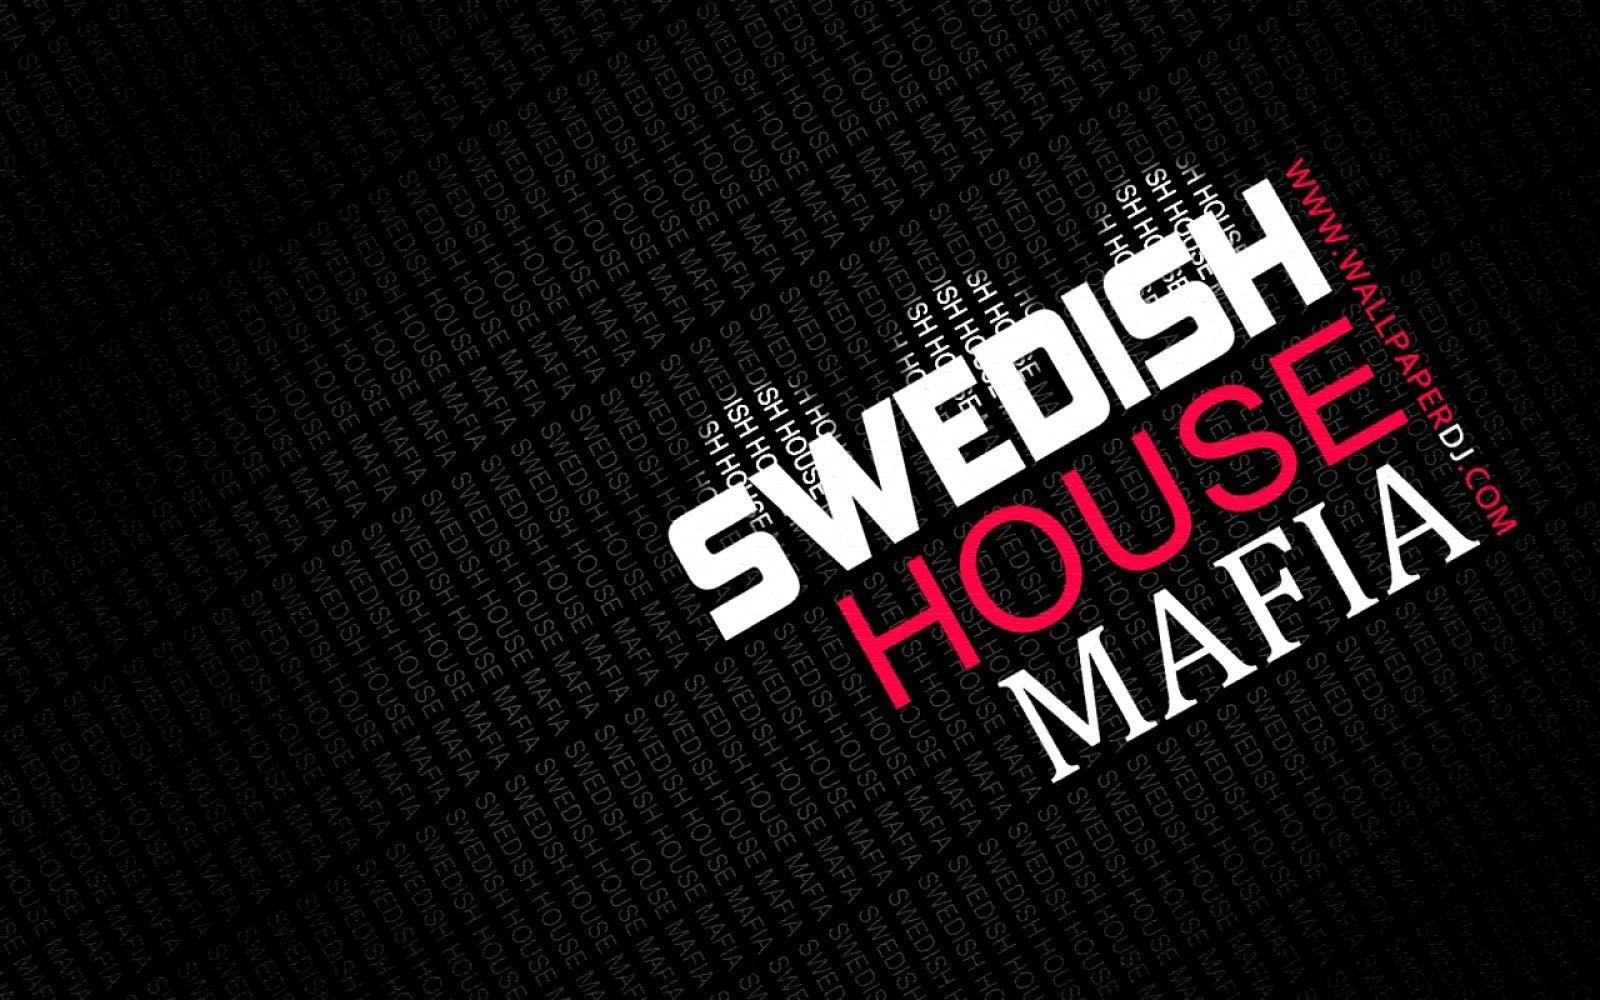 Swedish House Mafia logo design wallpaper. Swedish House Mafia